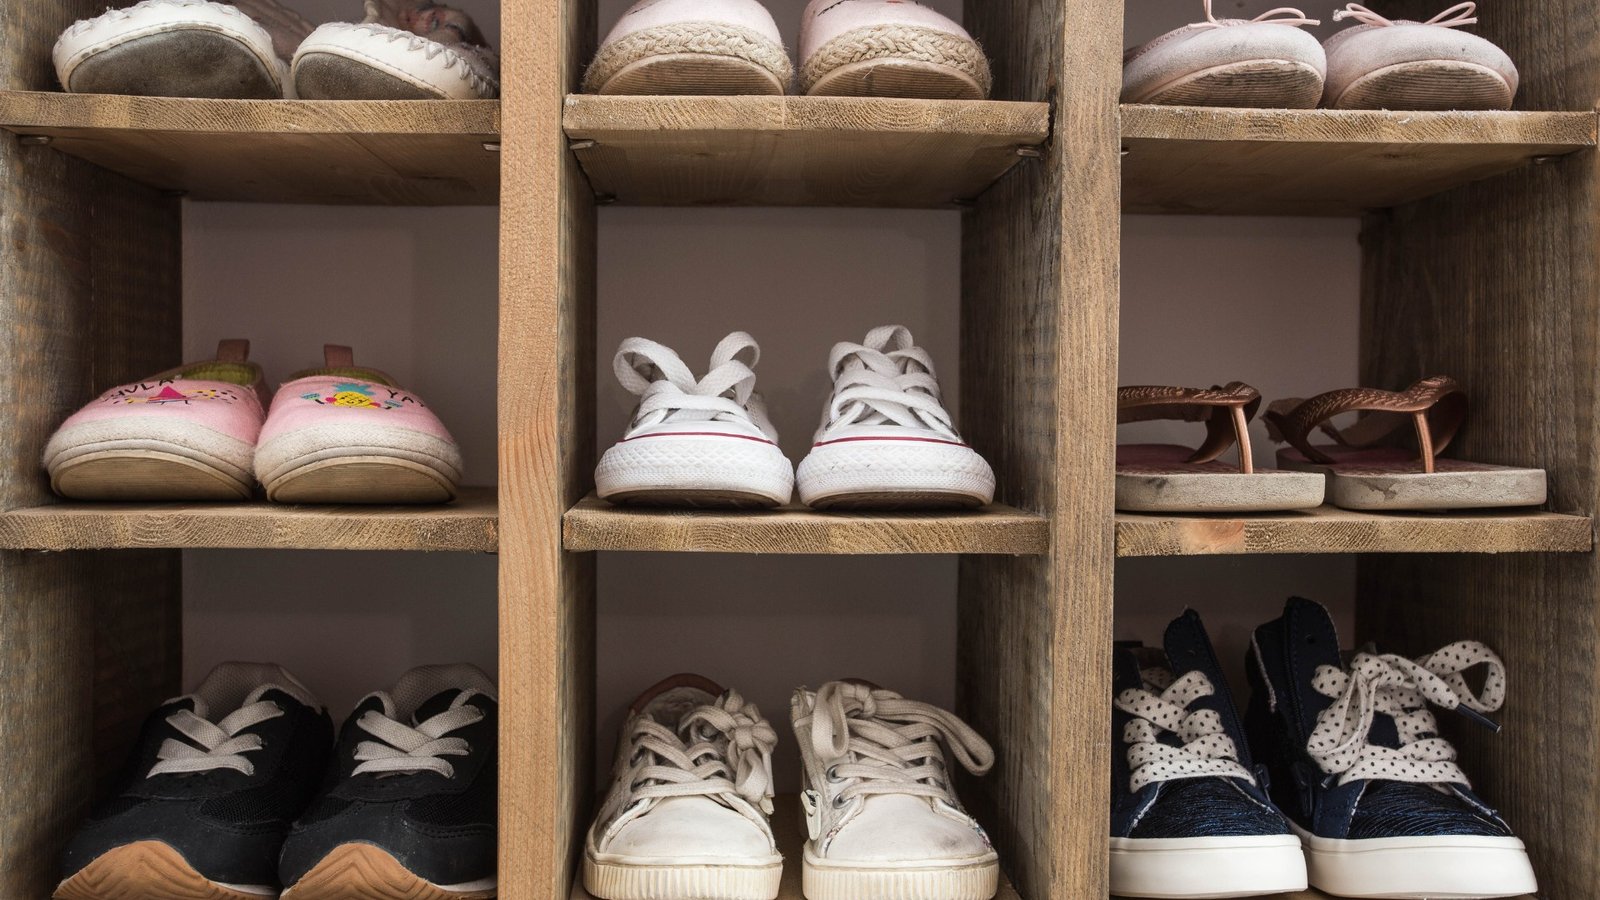 Ecco shoes in the shelf